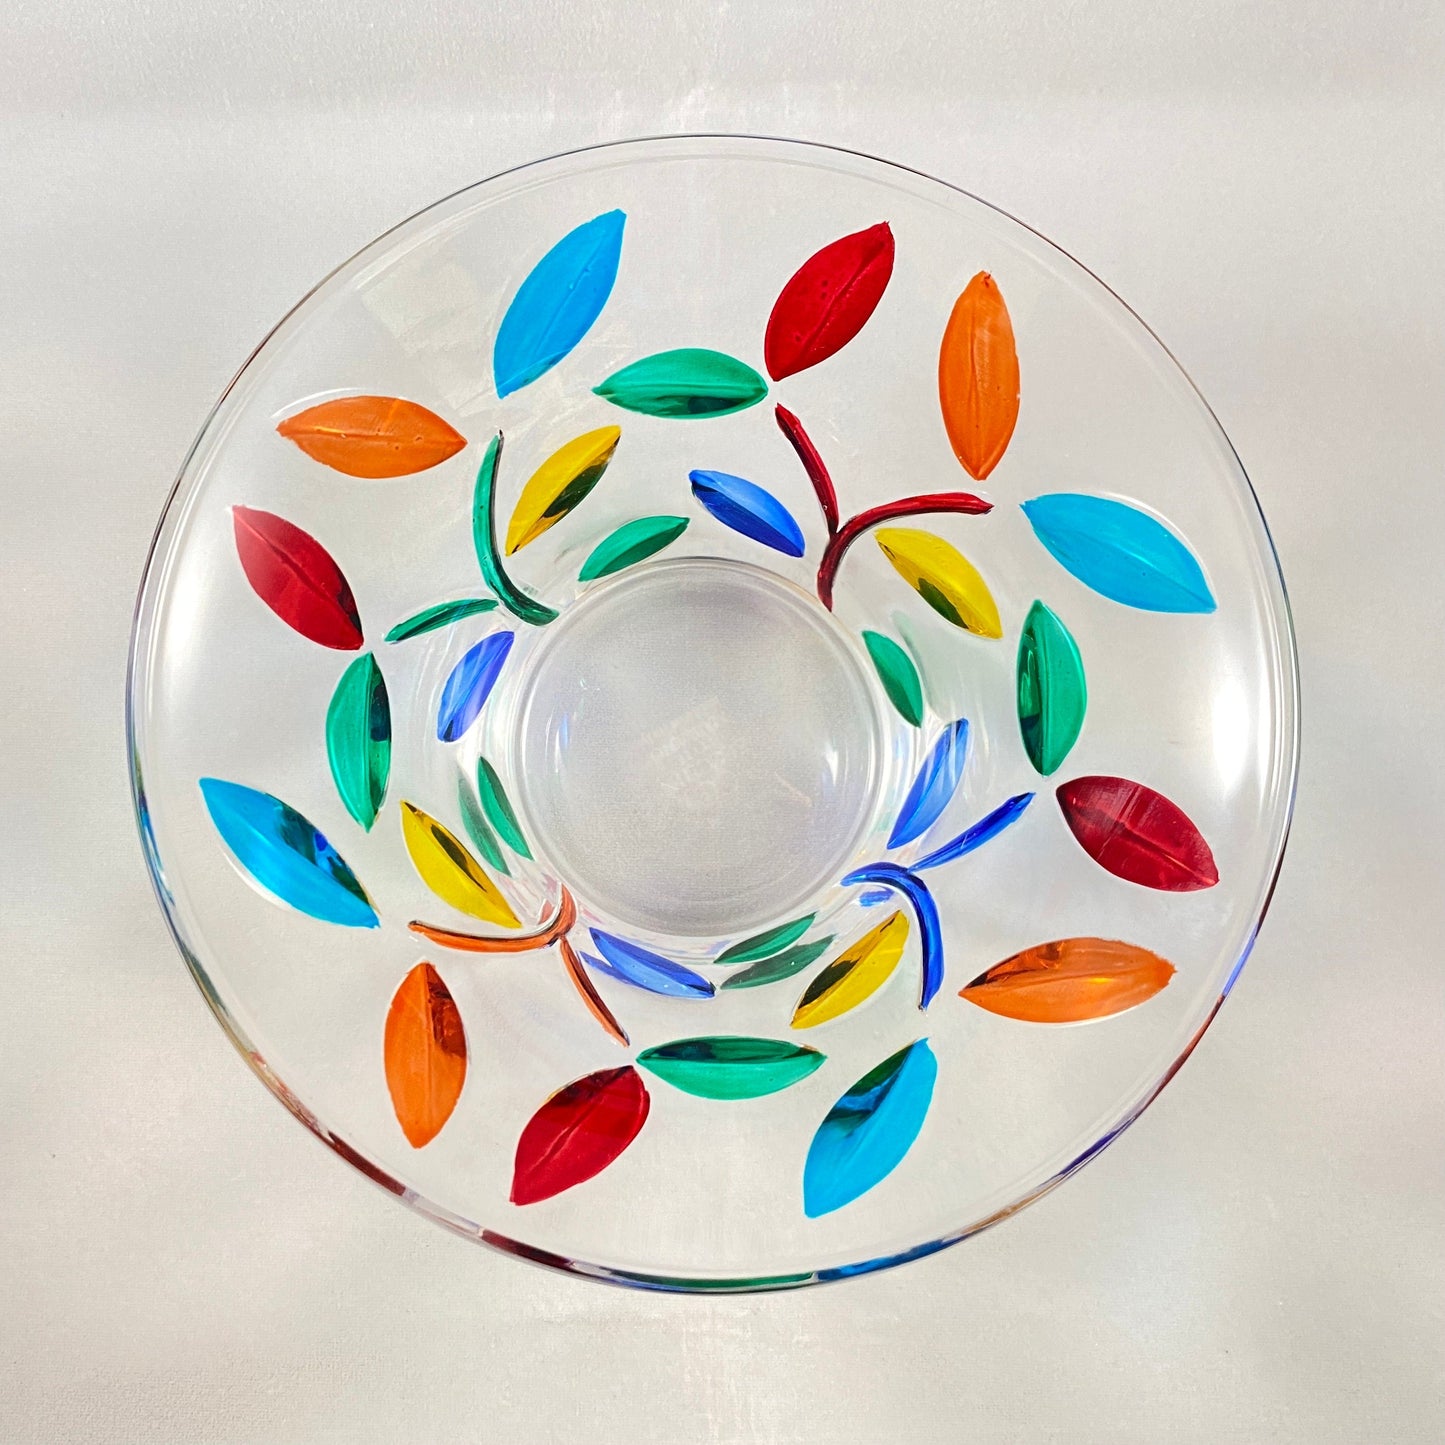 Venetian Glass Tree of Life Dish - Handmade in Italy, Colorful Murano Glass